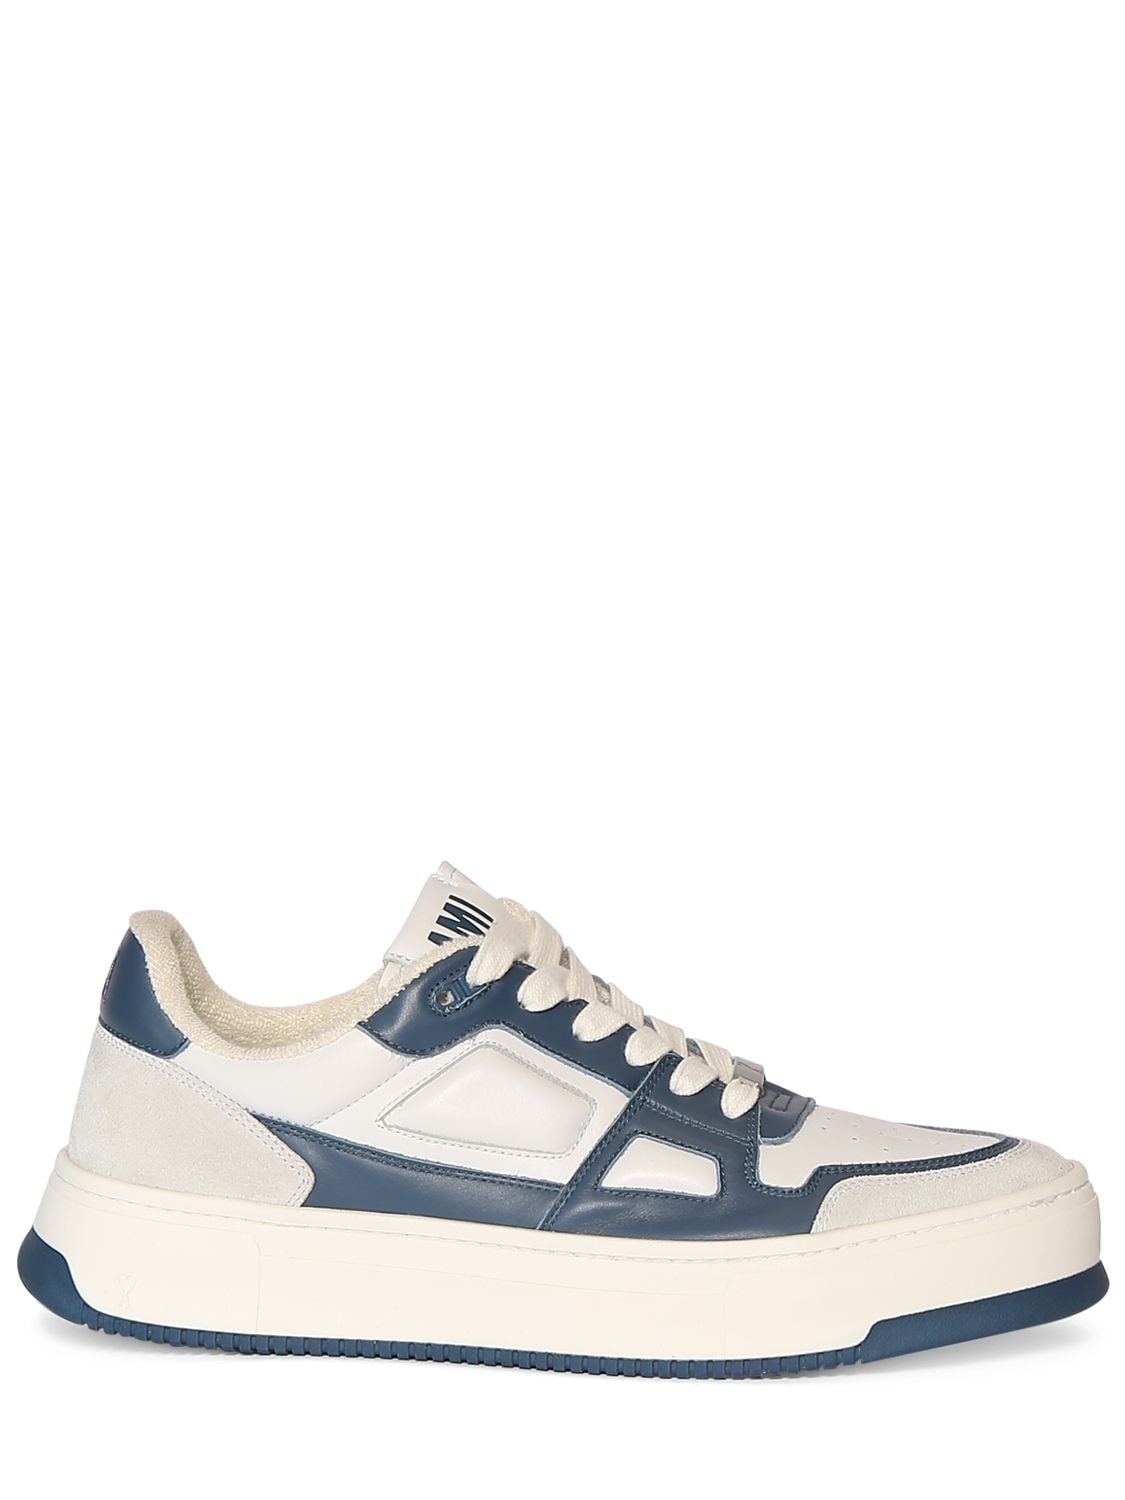 Ami Alexandre Mattiussi New Arcade Low Top Sneakers In White,blue